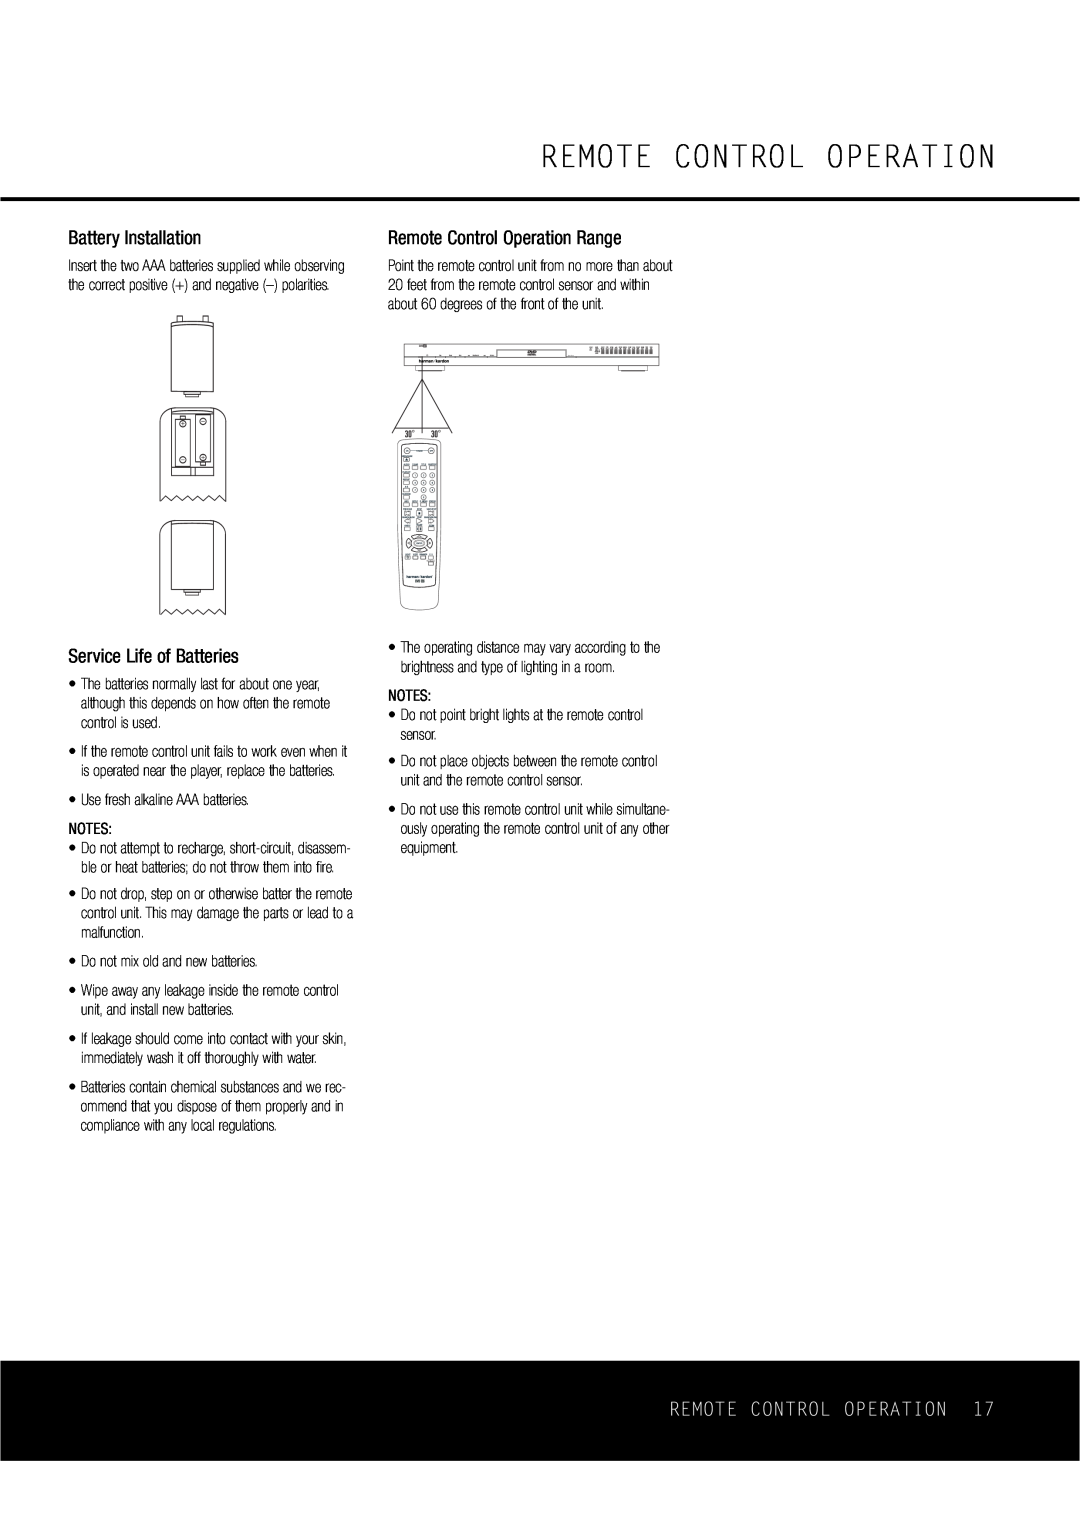 Harman-Kardon DVD47 owner manual Battery Installation, Remote Control Operation Range, Service Life of Batteries 